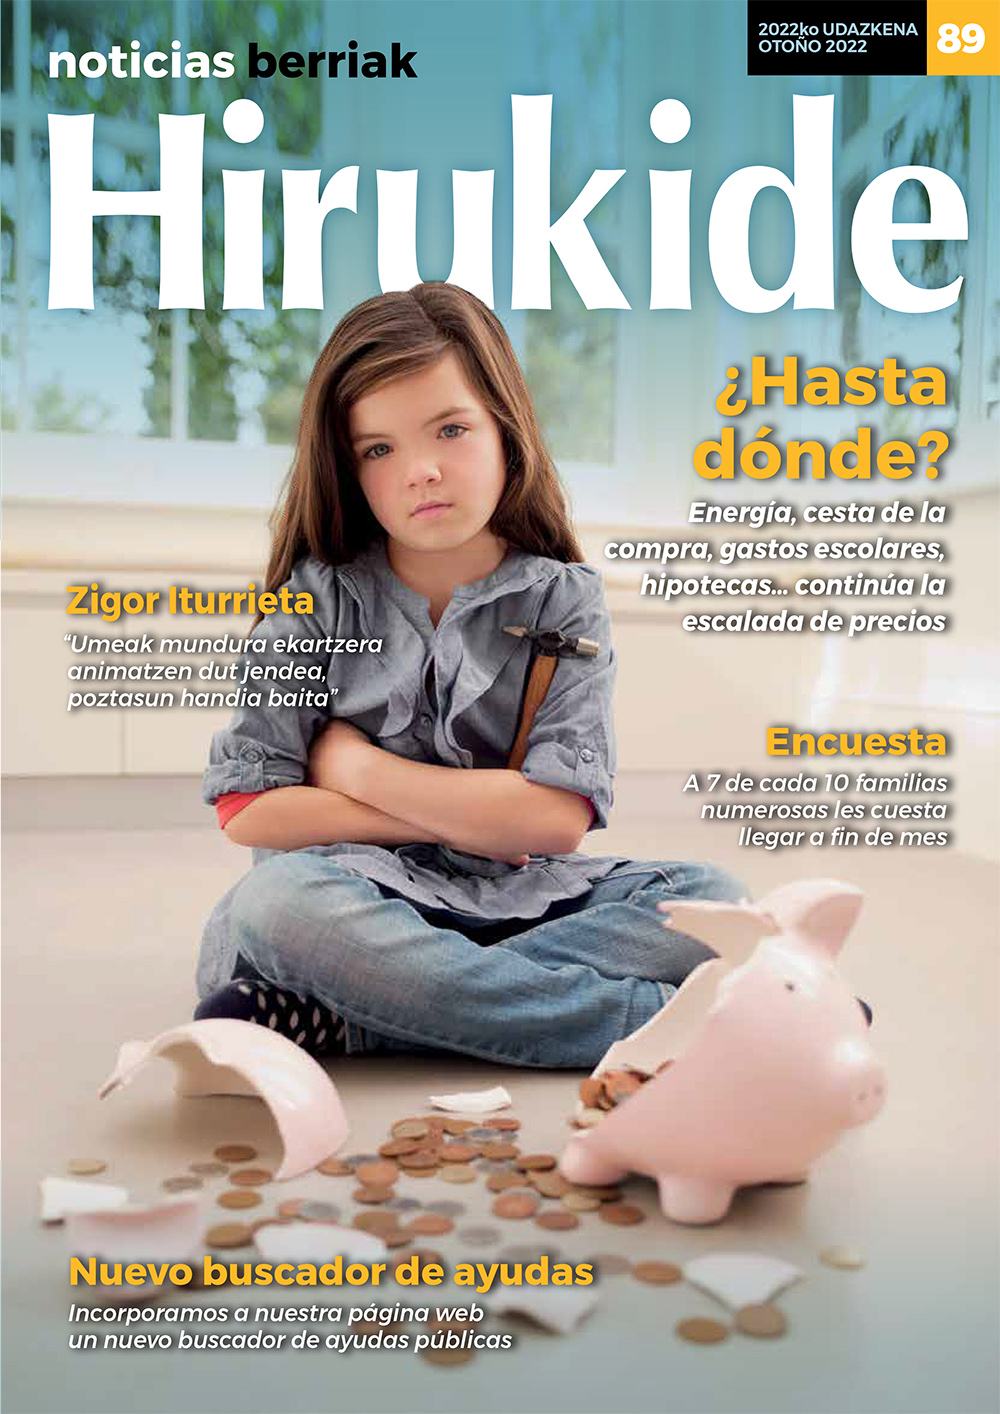 Revista Hirukide